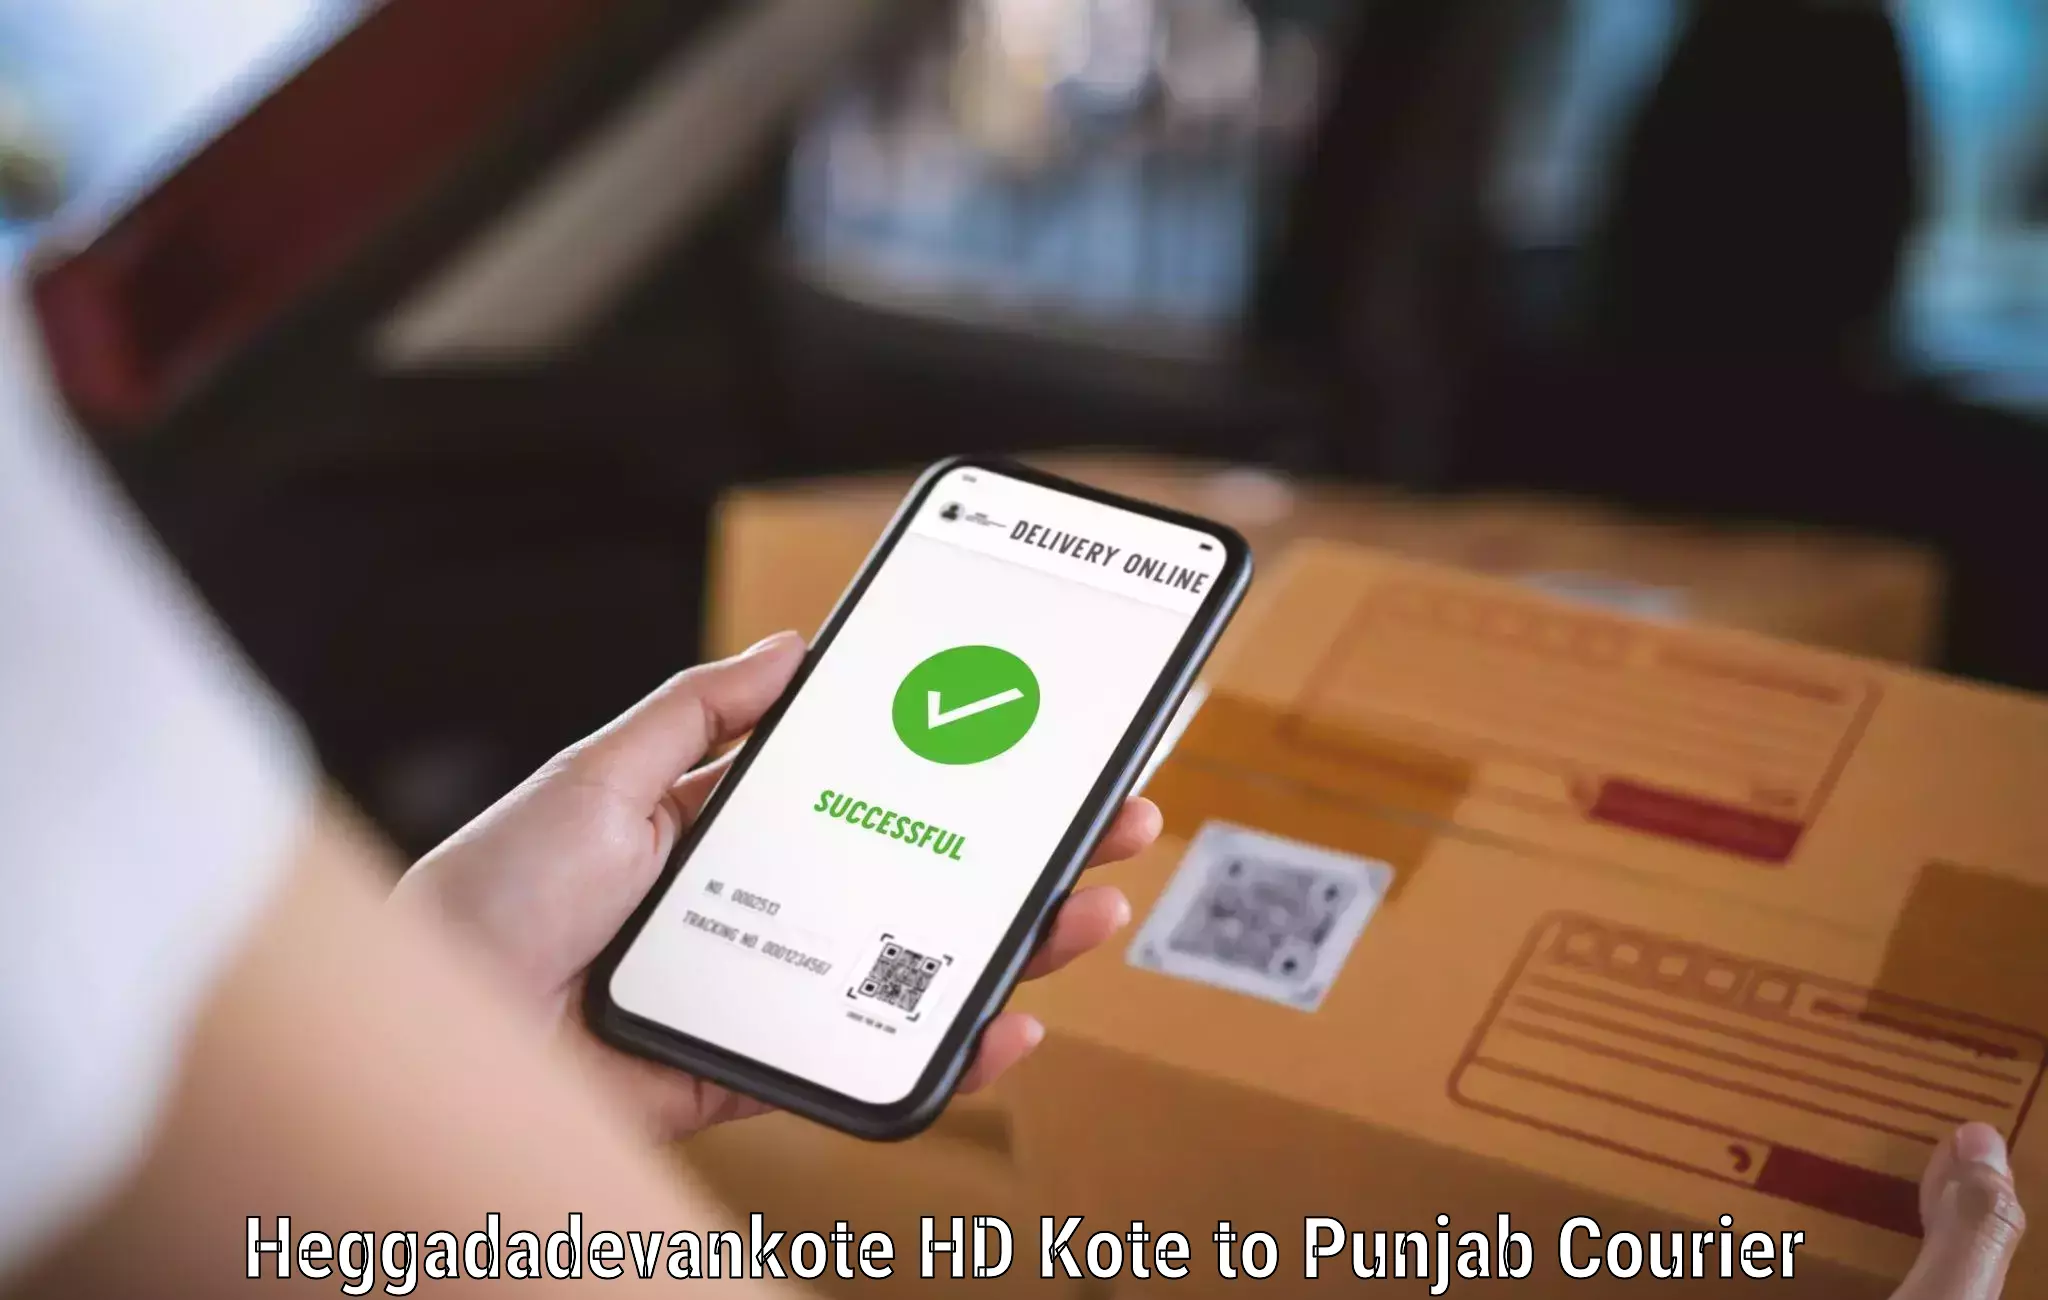 Professional delivery solutions Heggadadevankote HD Kote to Anandpur Sahib